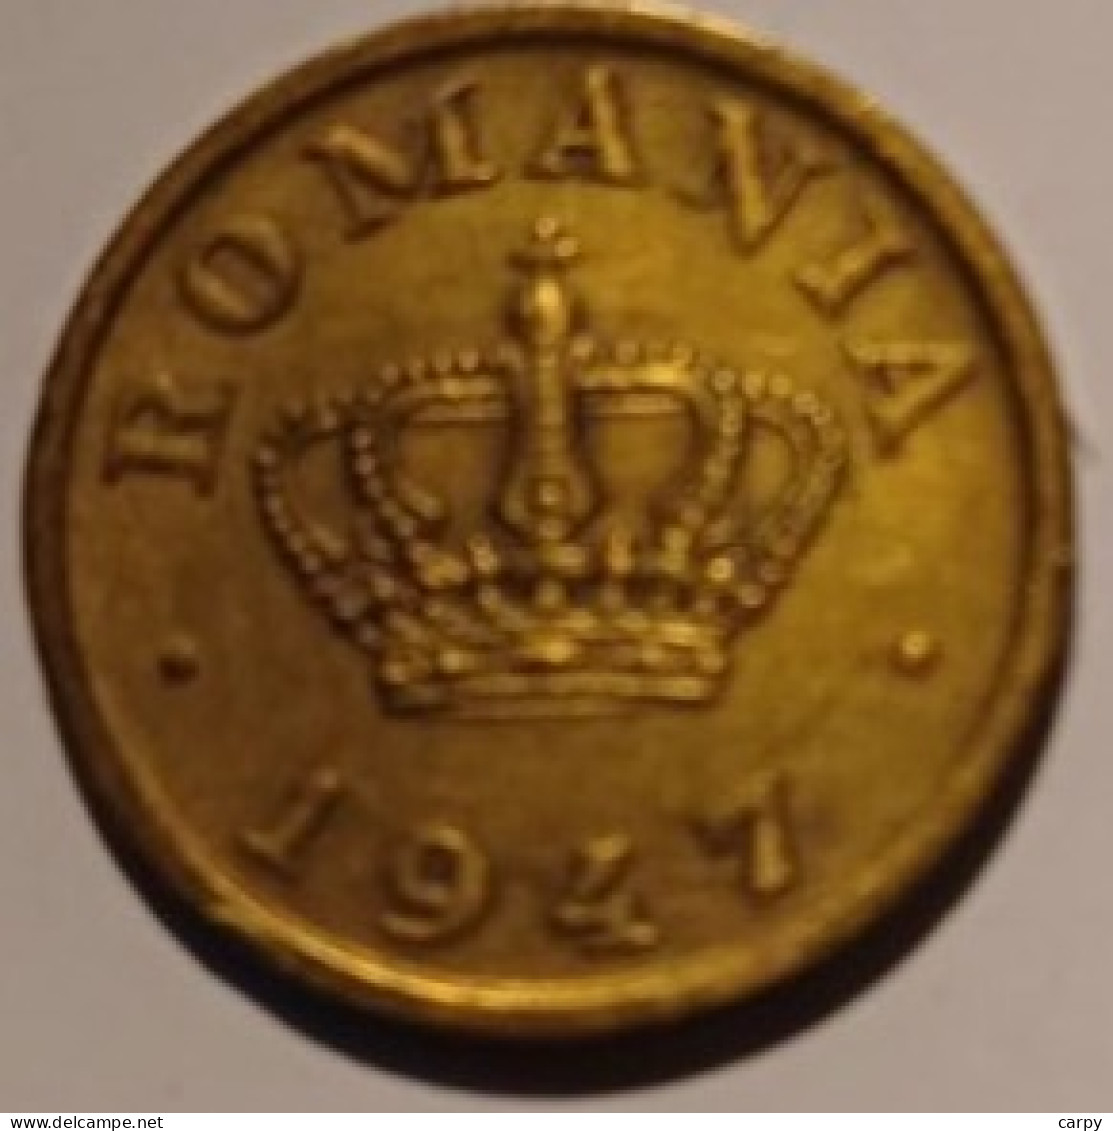 ROMANIA 50 Bani 1947 / King Michael I / Very Nice Looking / RARE - Rumänien